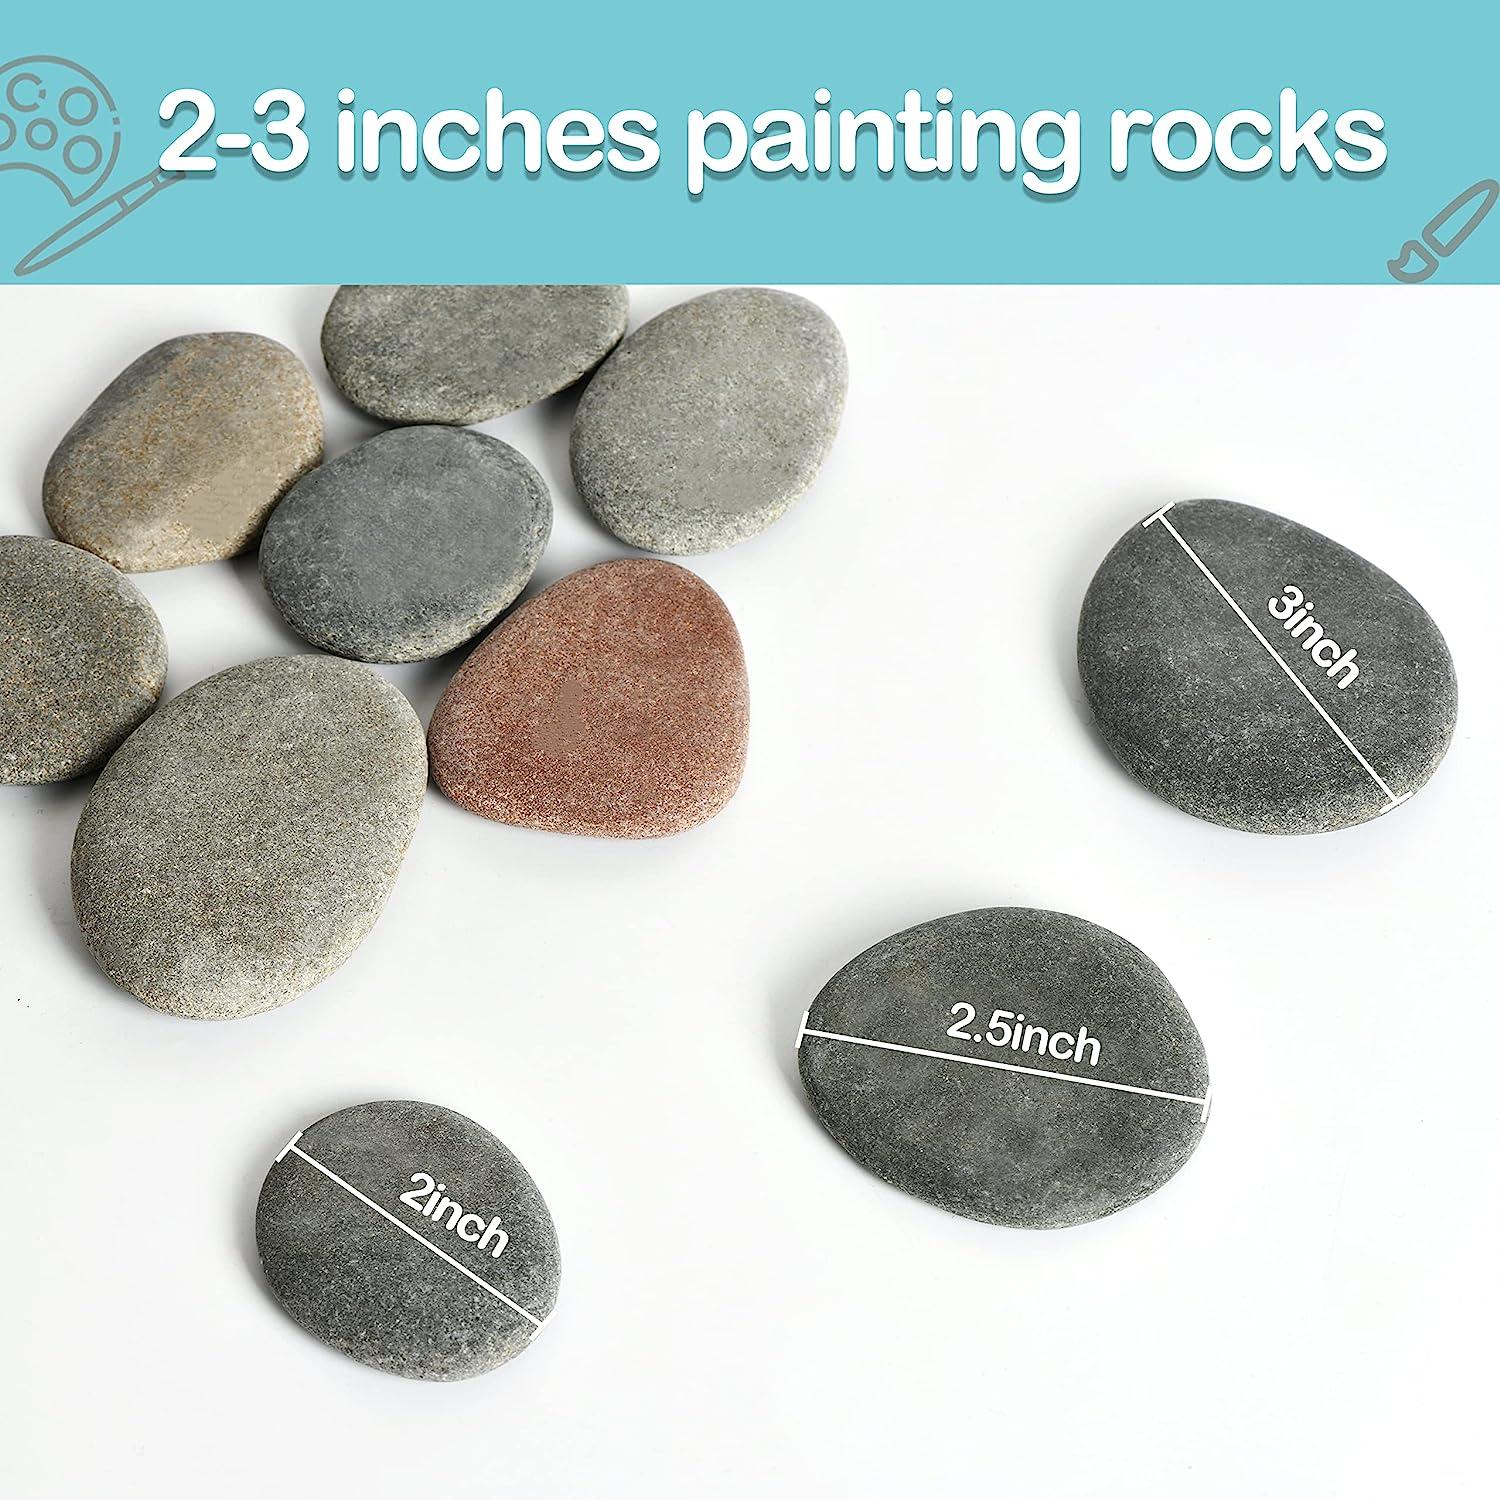 Flat Rocks for Painting, 20 Pcs Painting Rocks 2-3 Rocks to Paint Smooth  Rocks for Painting, Natural Stones Garden Decoration